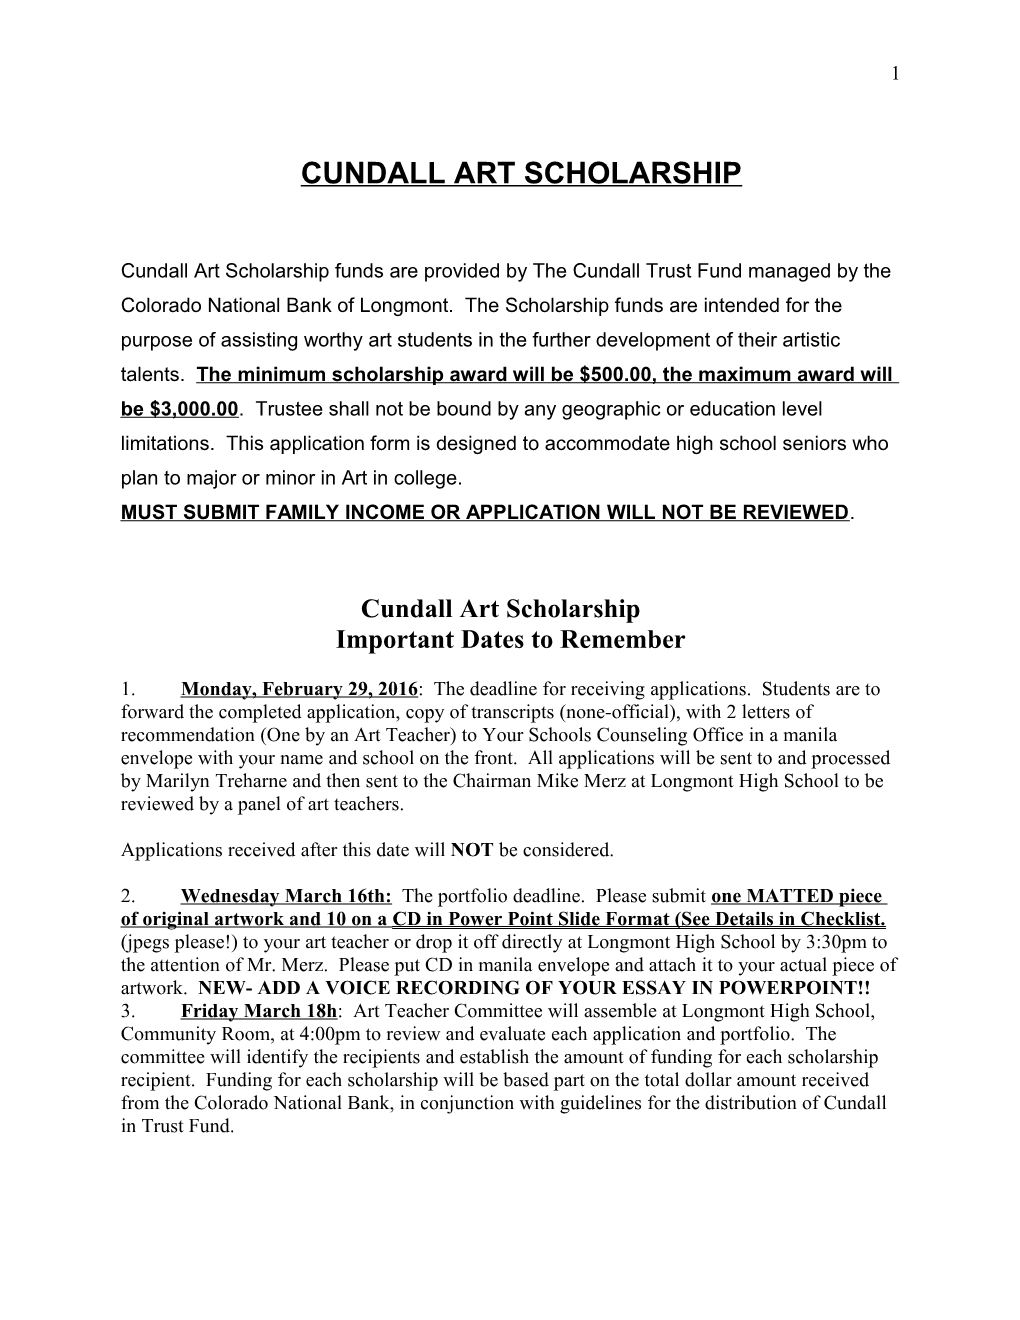 Cundall Art Scholarship